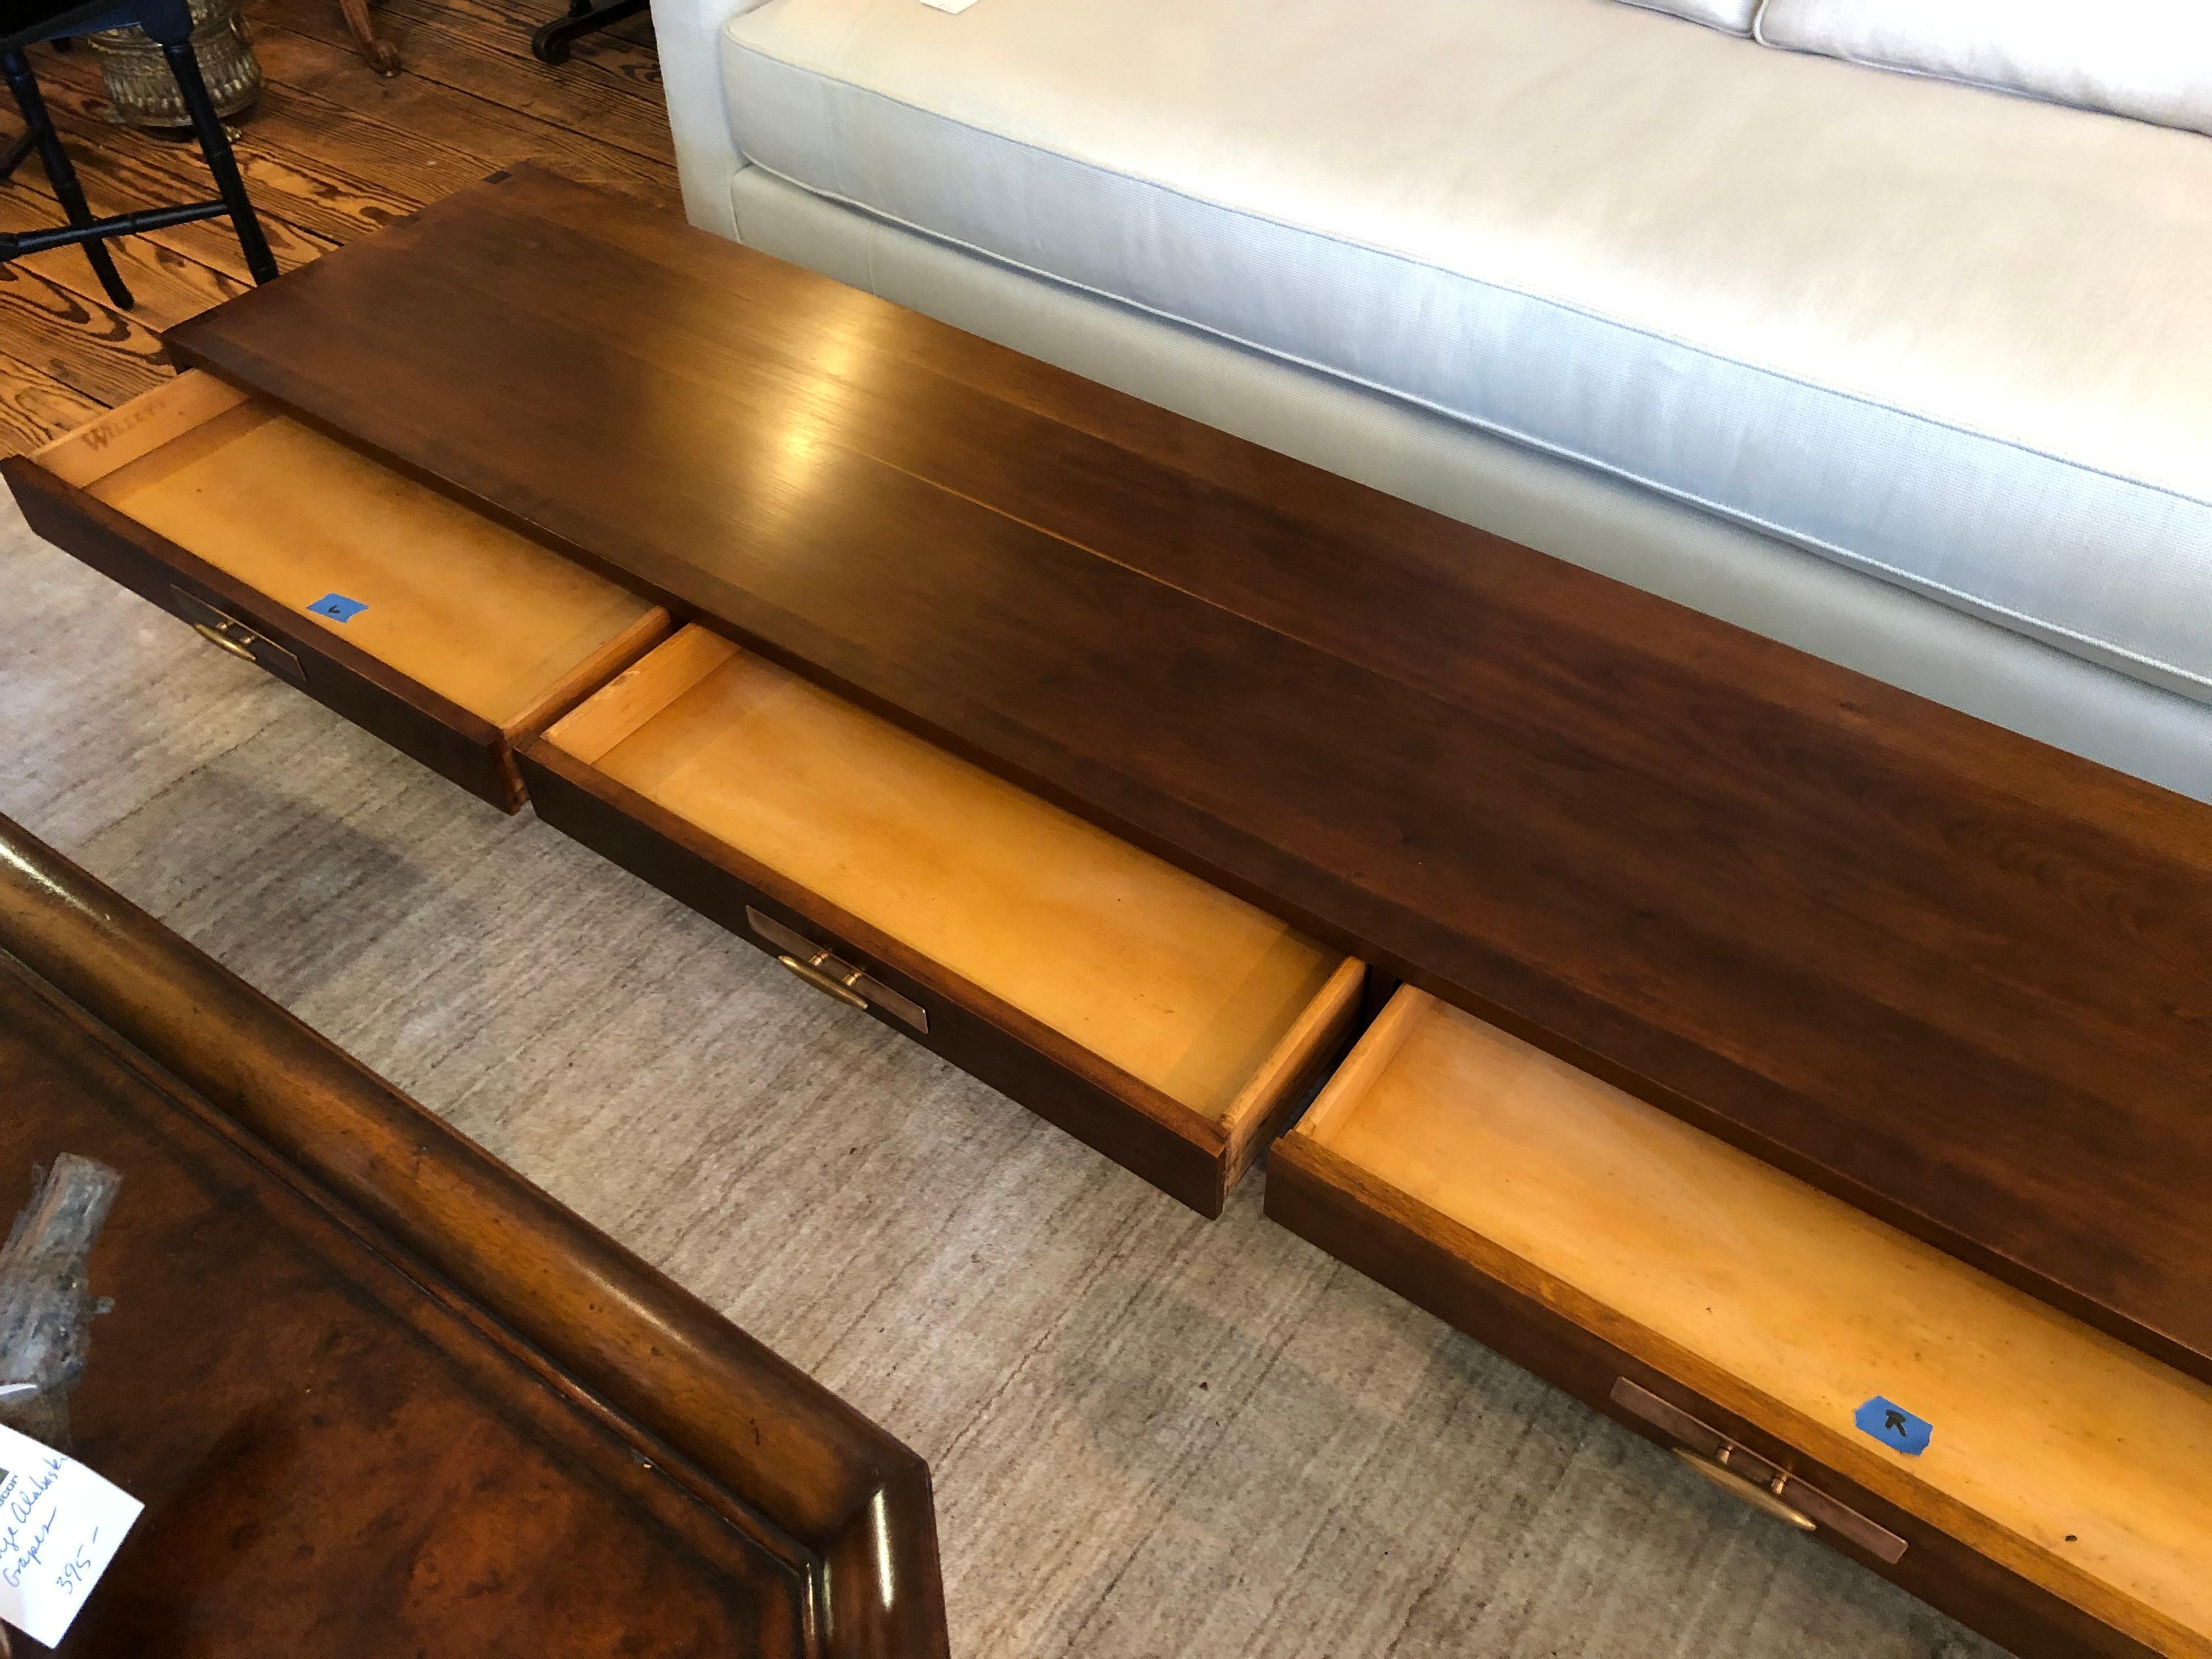 sleek coffee table